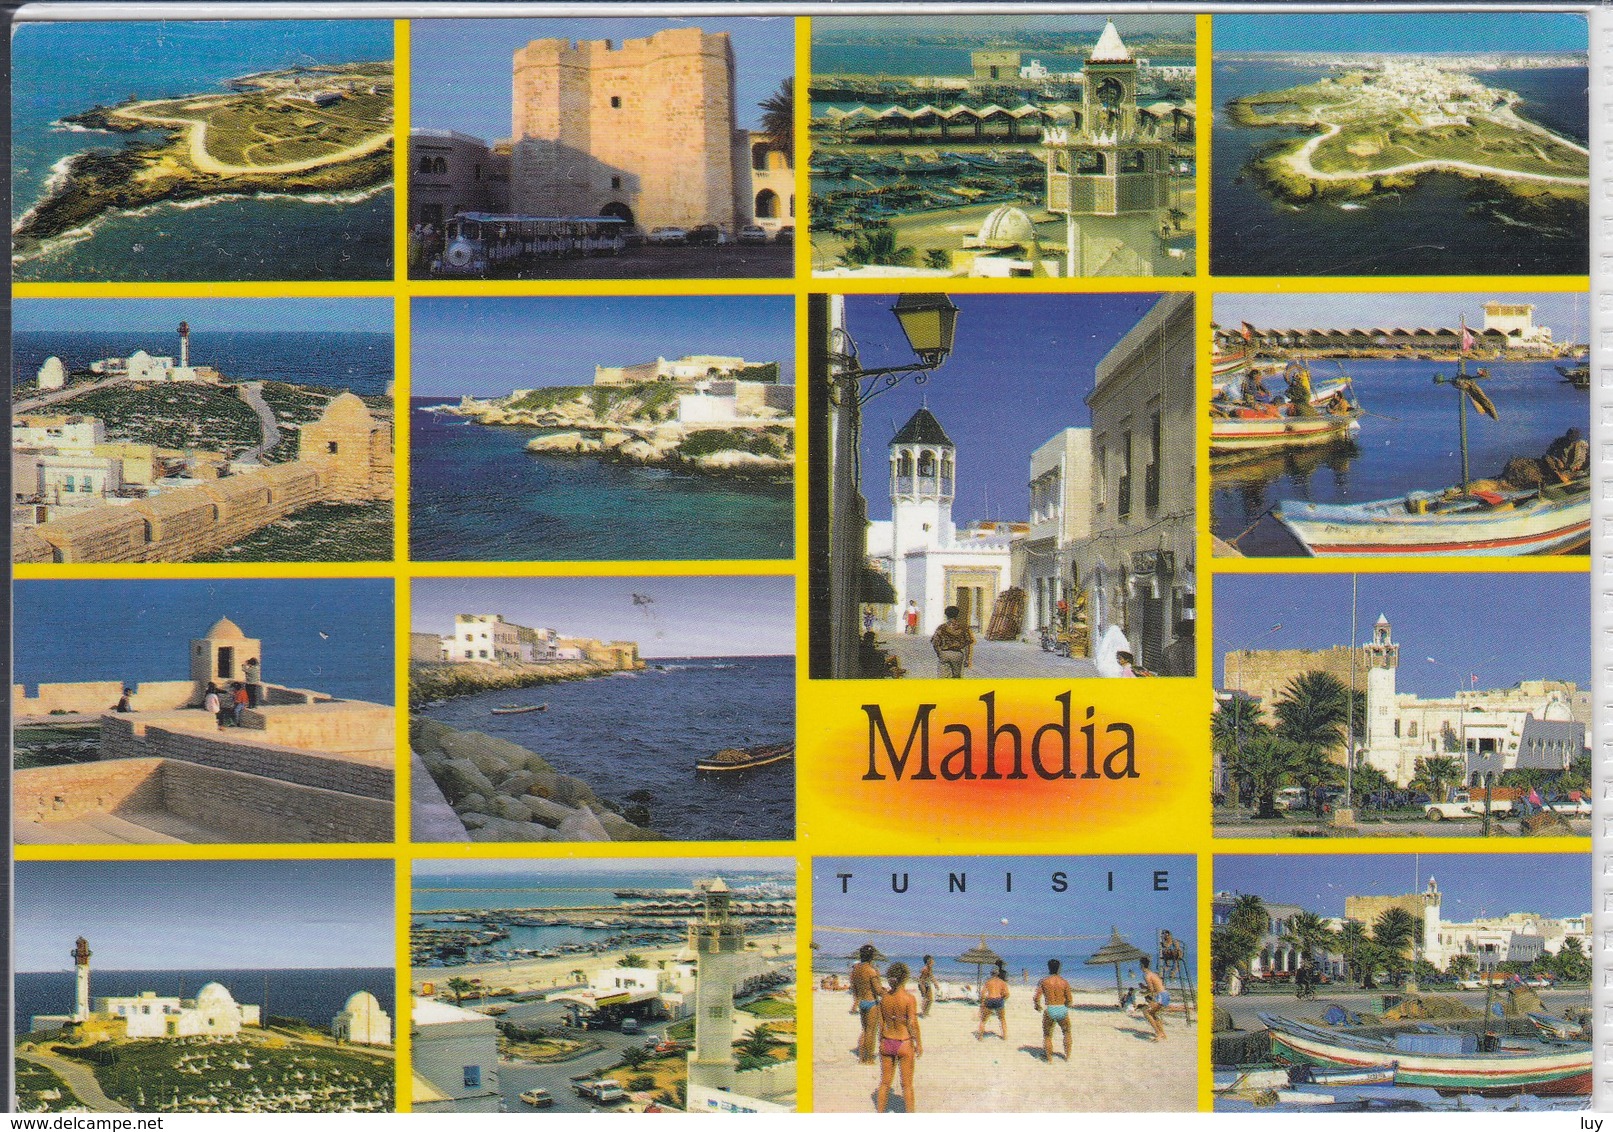 MAHDIA TUNISIE  Multi View   NICE STAMP - Tunisia